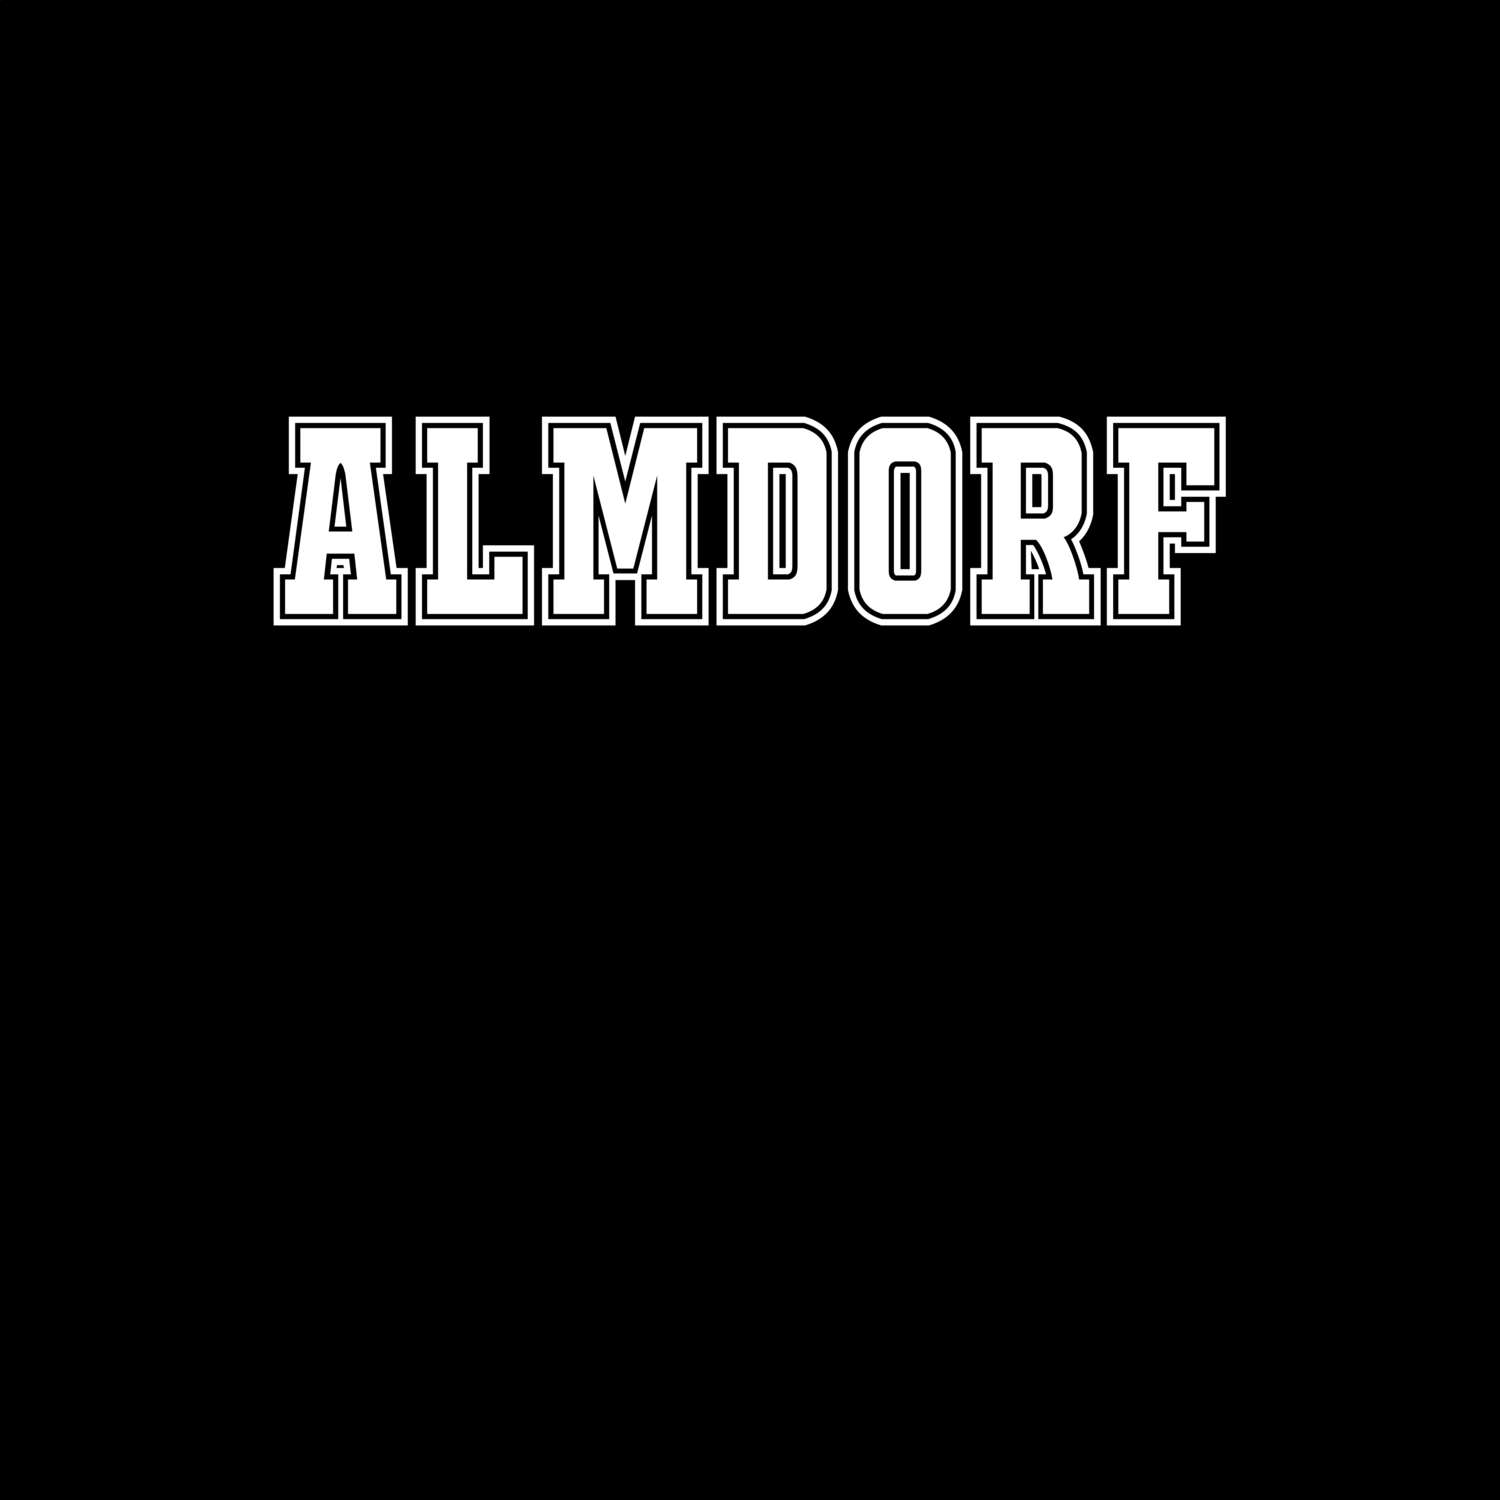 Almdorf T-Shirt »Classic«